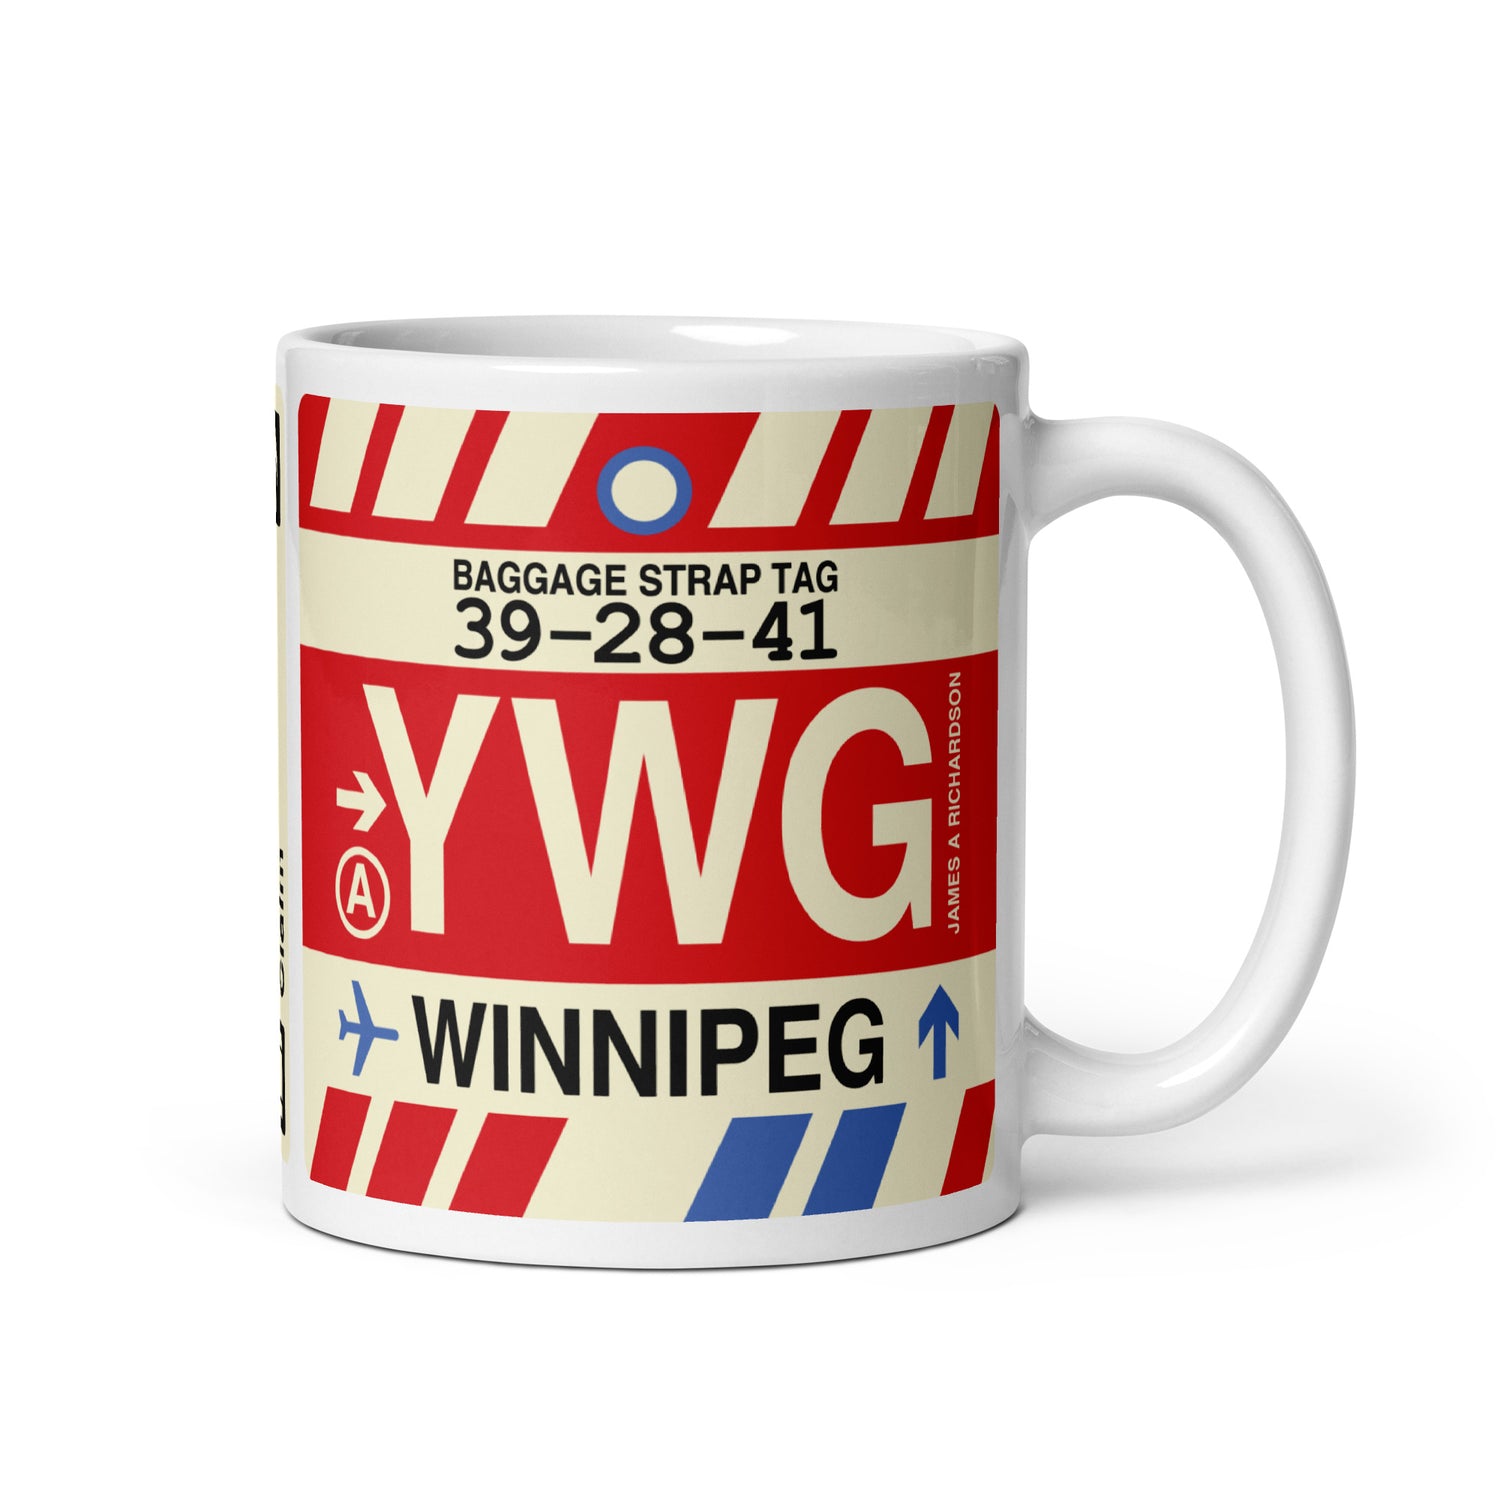 Winnipeg Manitoba Coffee Mugs and Water Bottles • YWG Airport Code